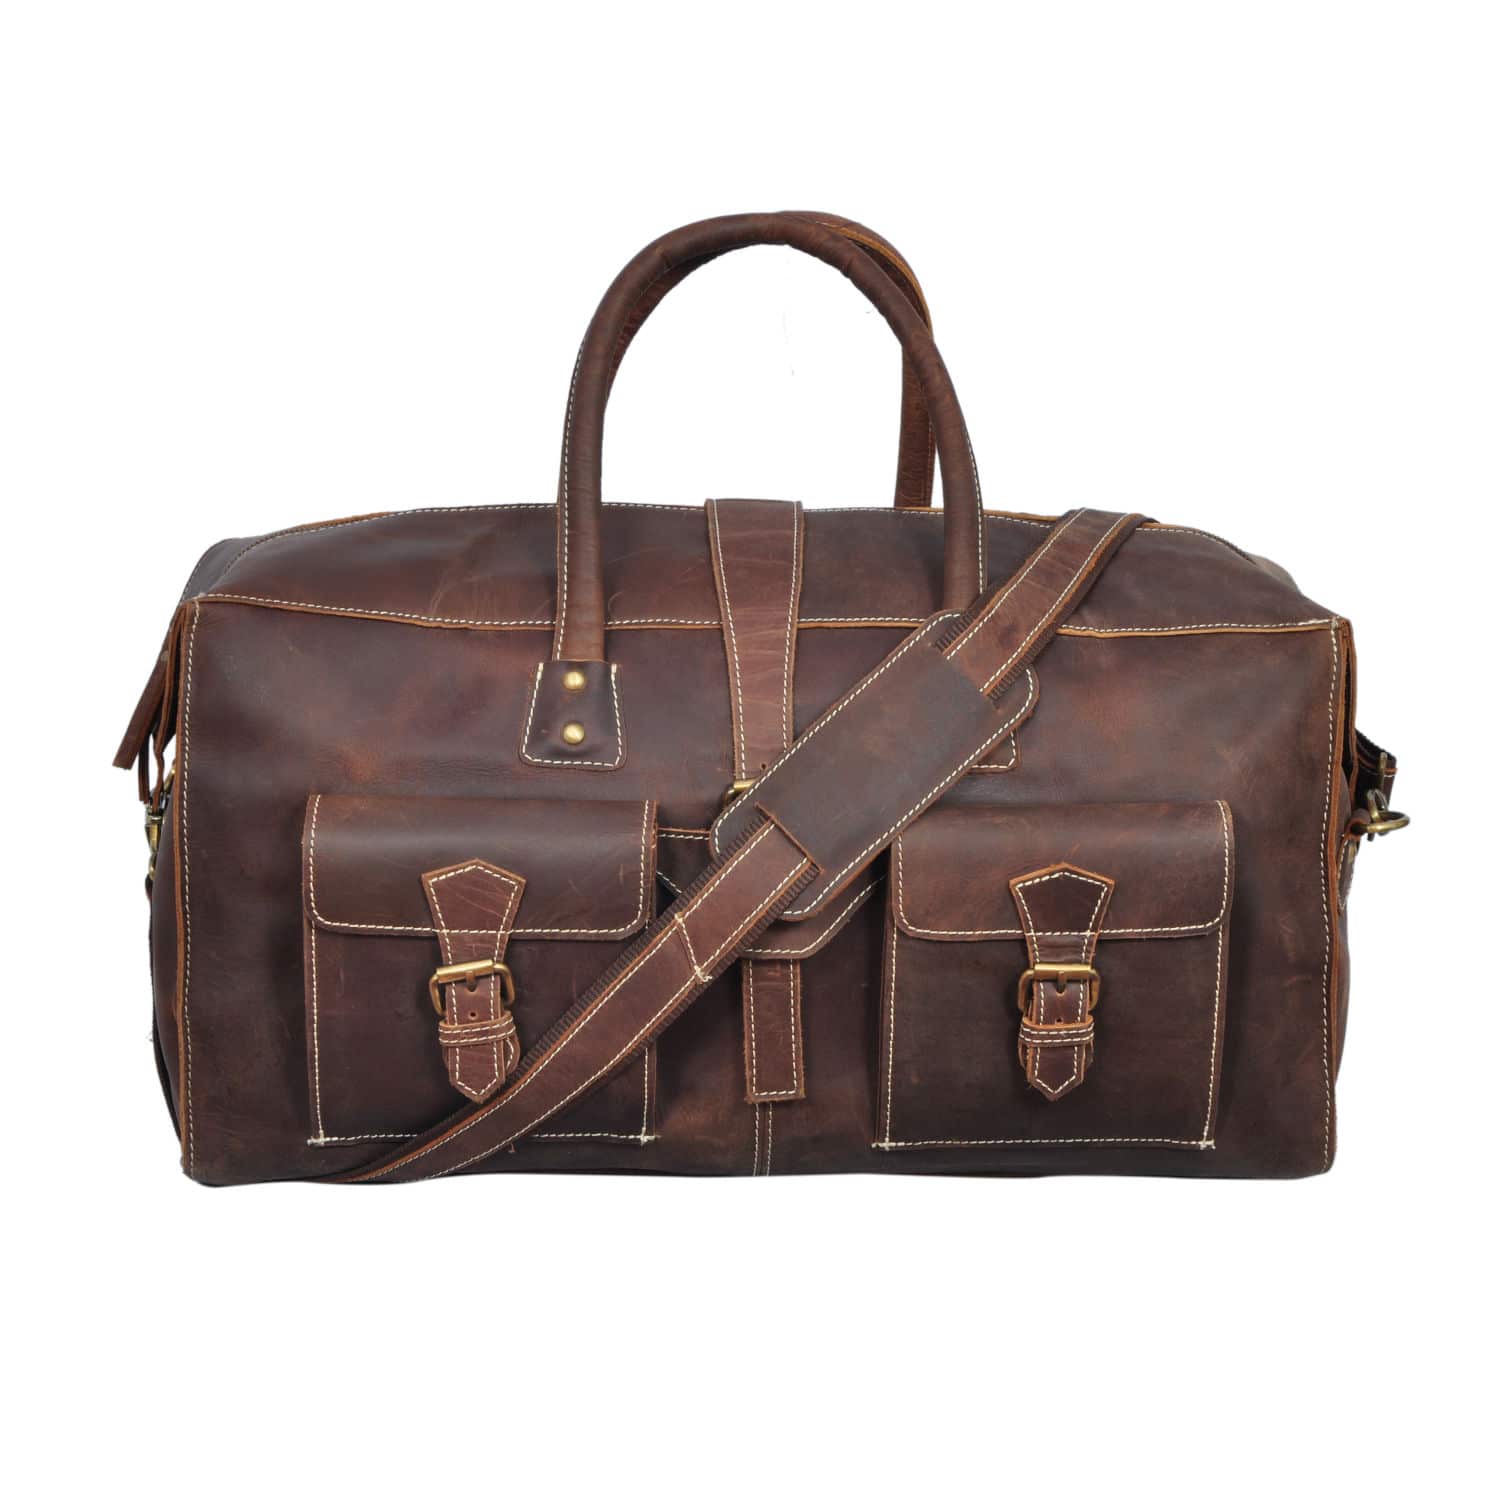 Chocolate Brown Rustic leather Travel Duffel Bag | Quvom.com